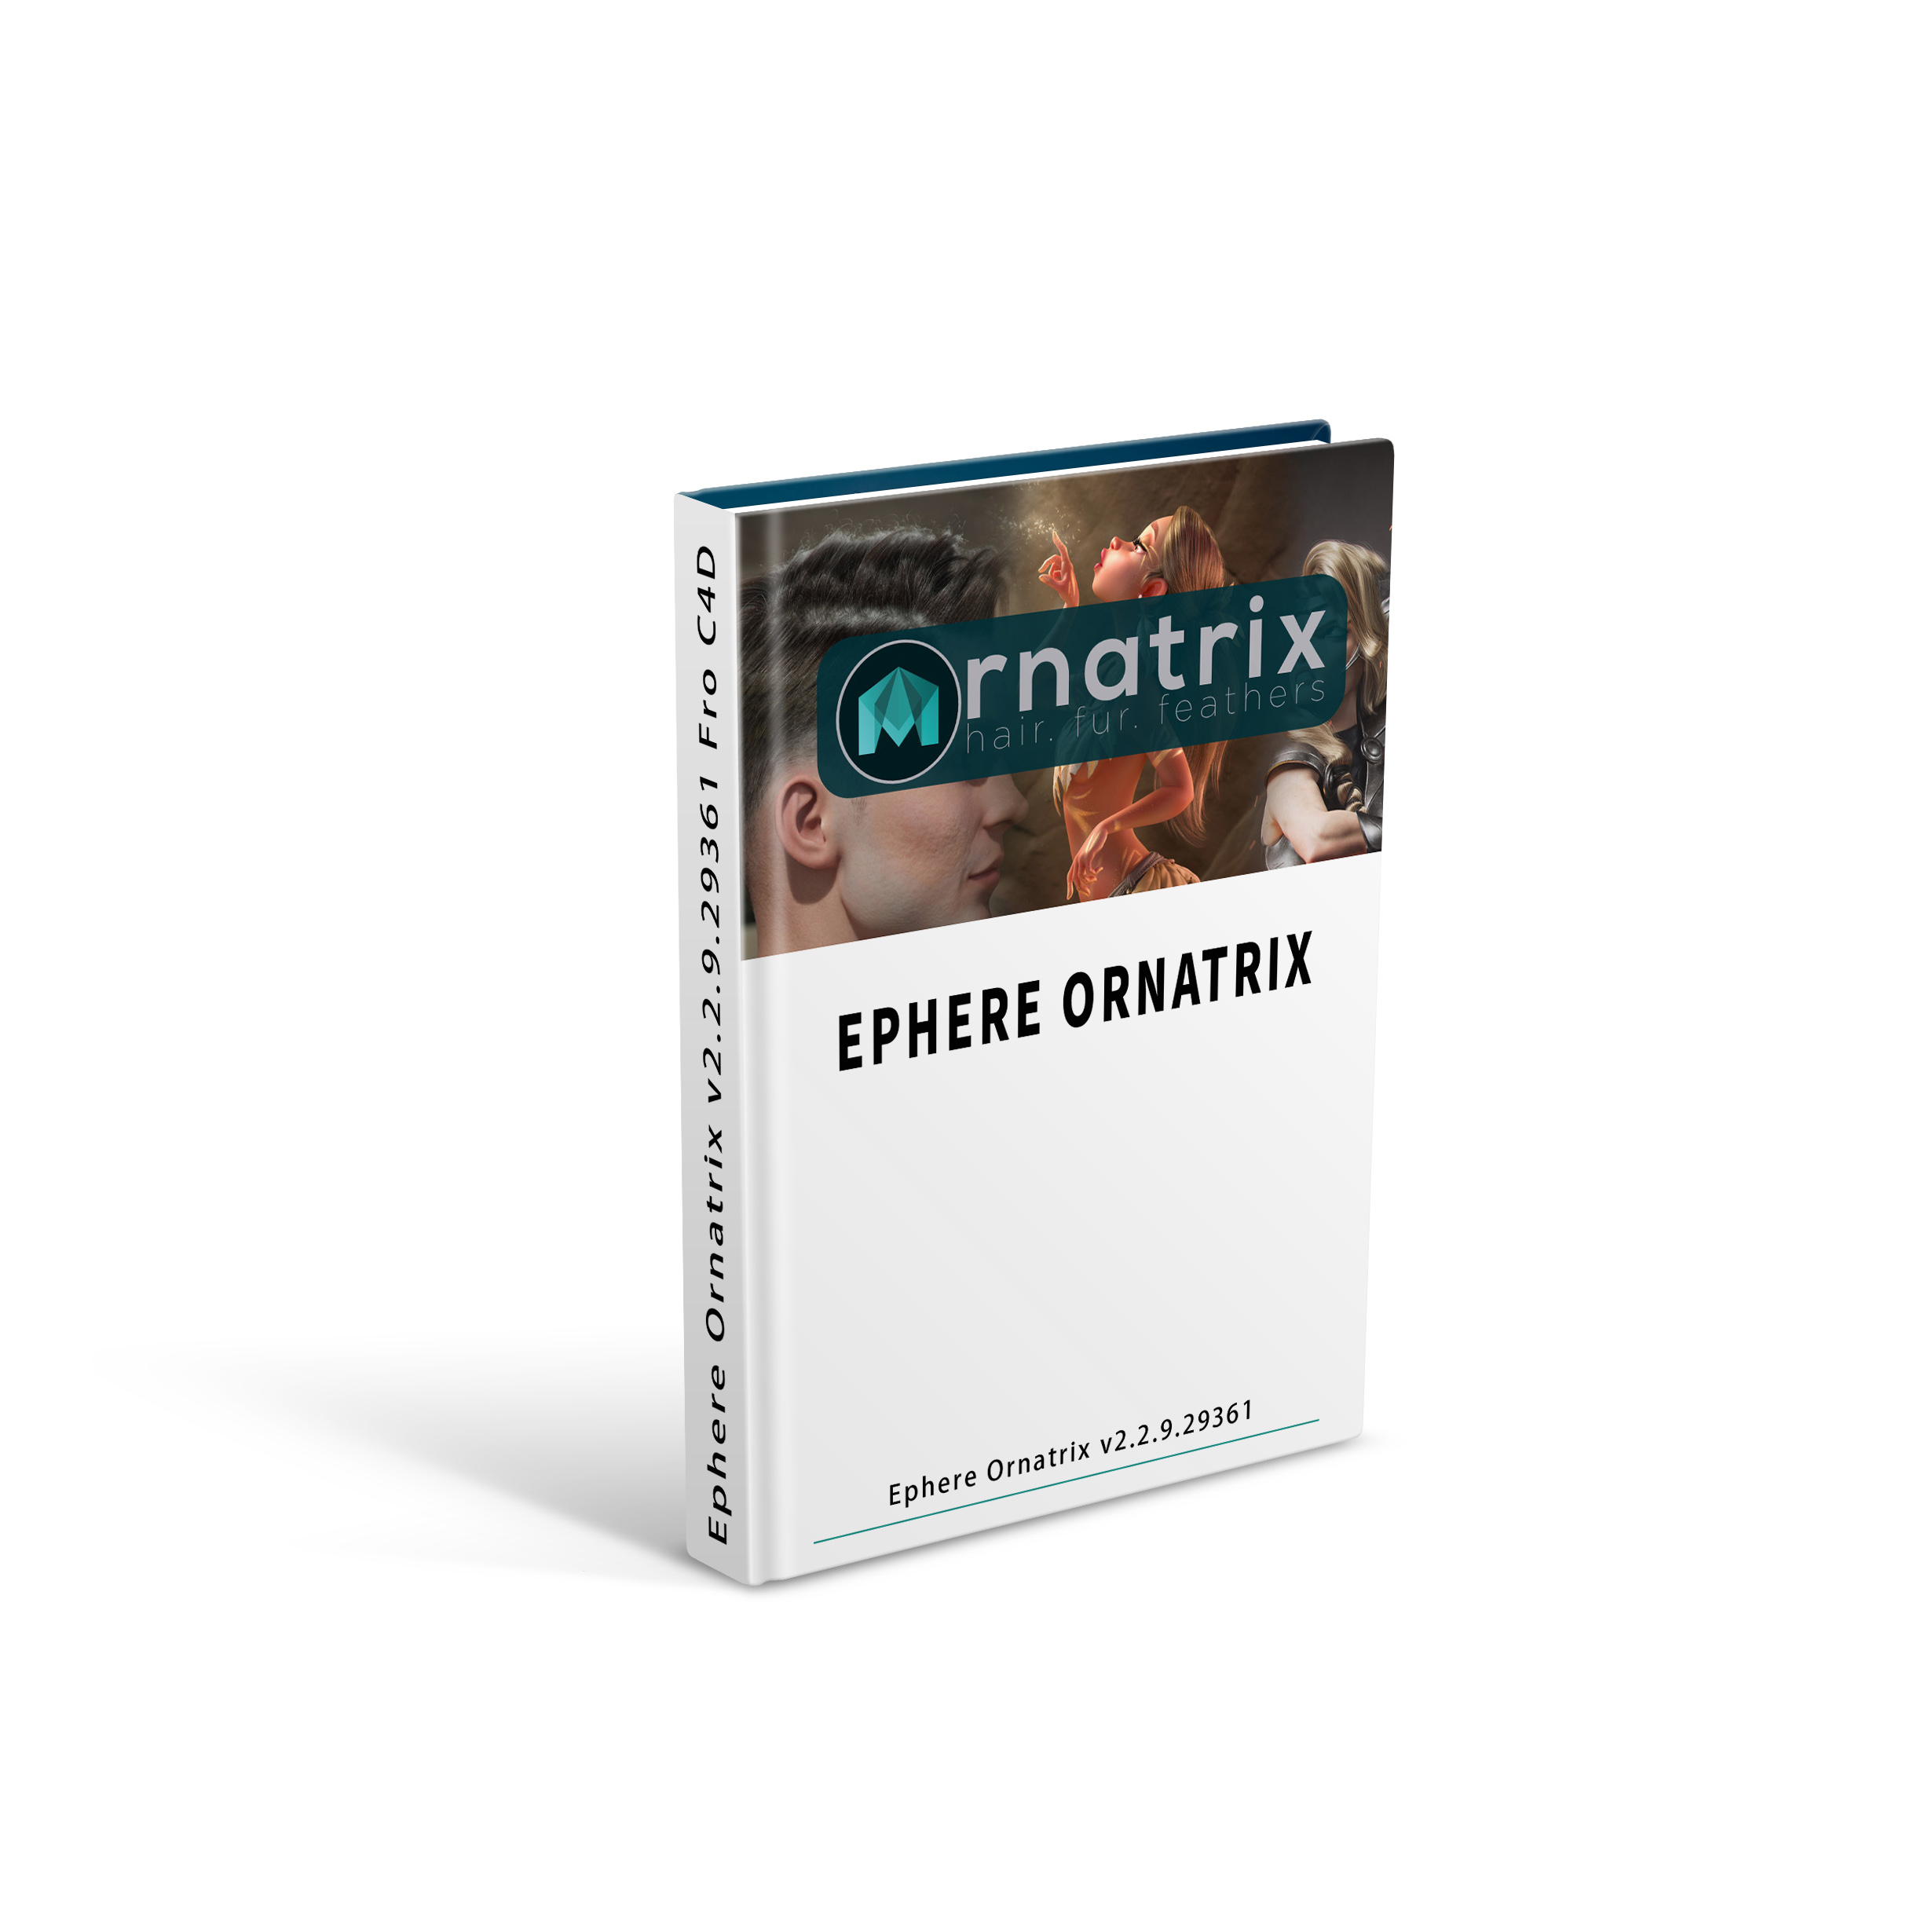 Ephere Ornatrix v2.2.9.29361 Fro Cinema 4D R19-R25 英文破解版 毛发插件